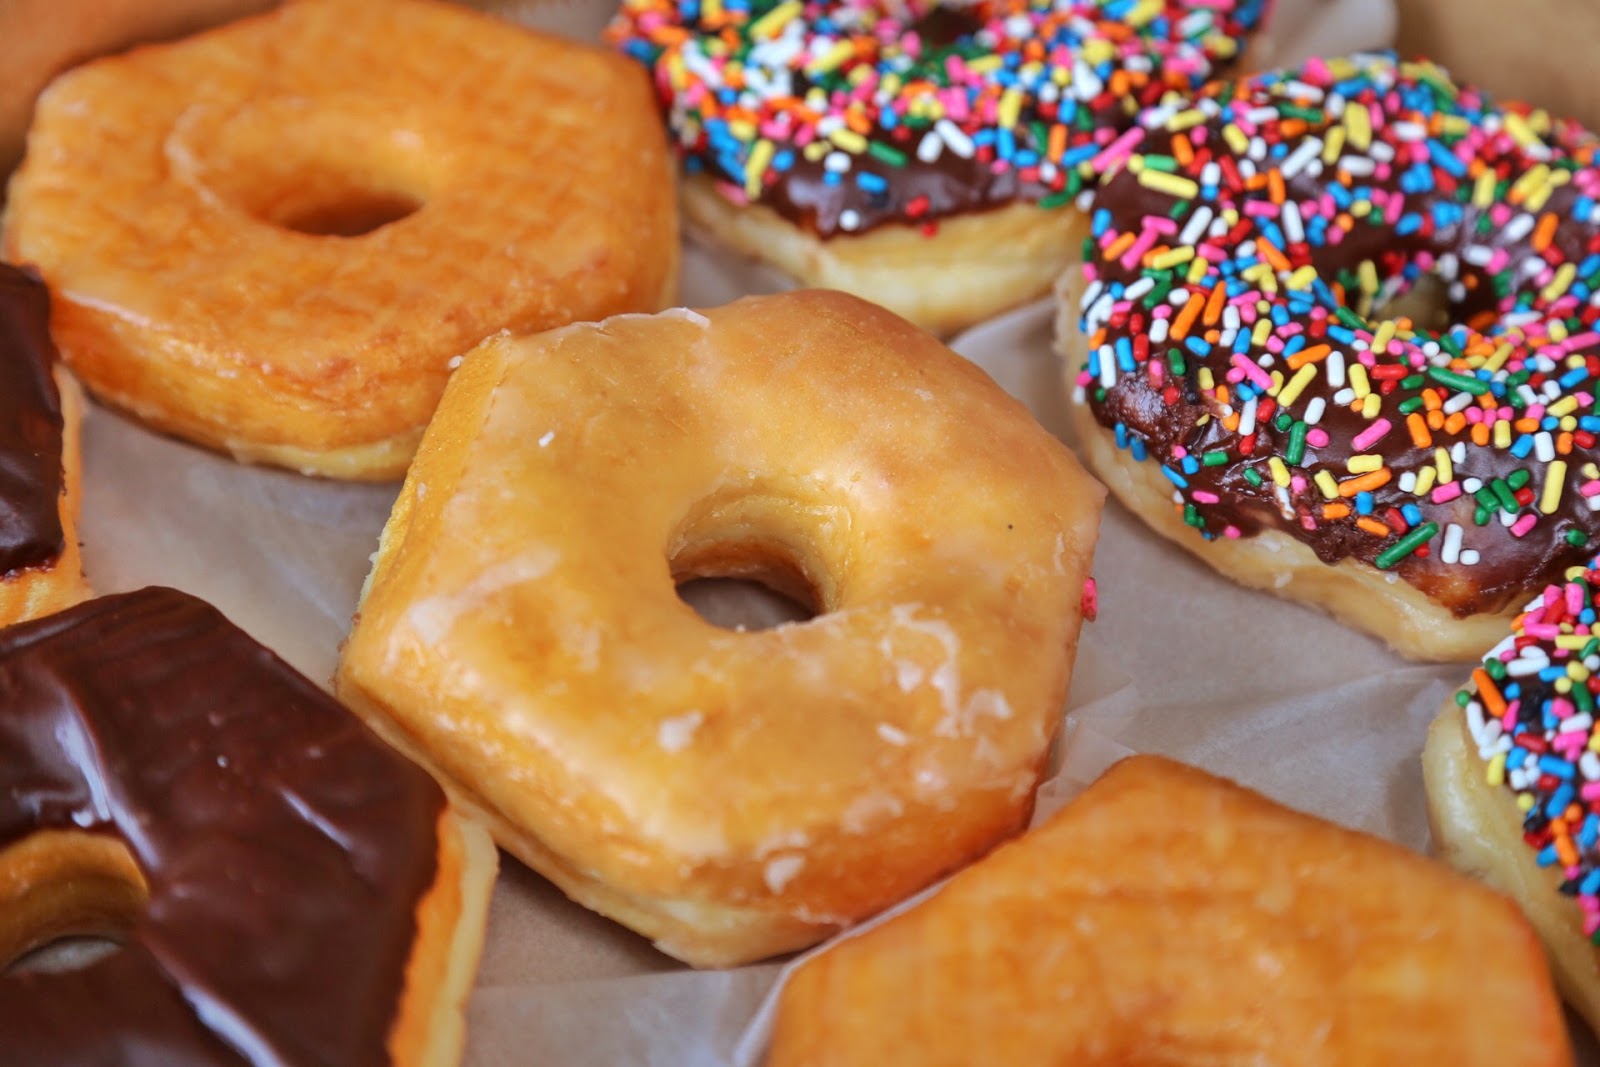 Sowell Life: Donut + Chocolate + Sprinkles... YASSS!!